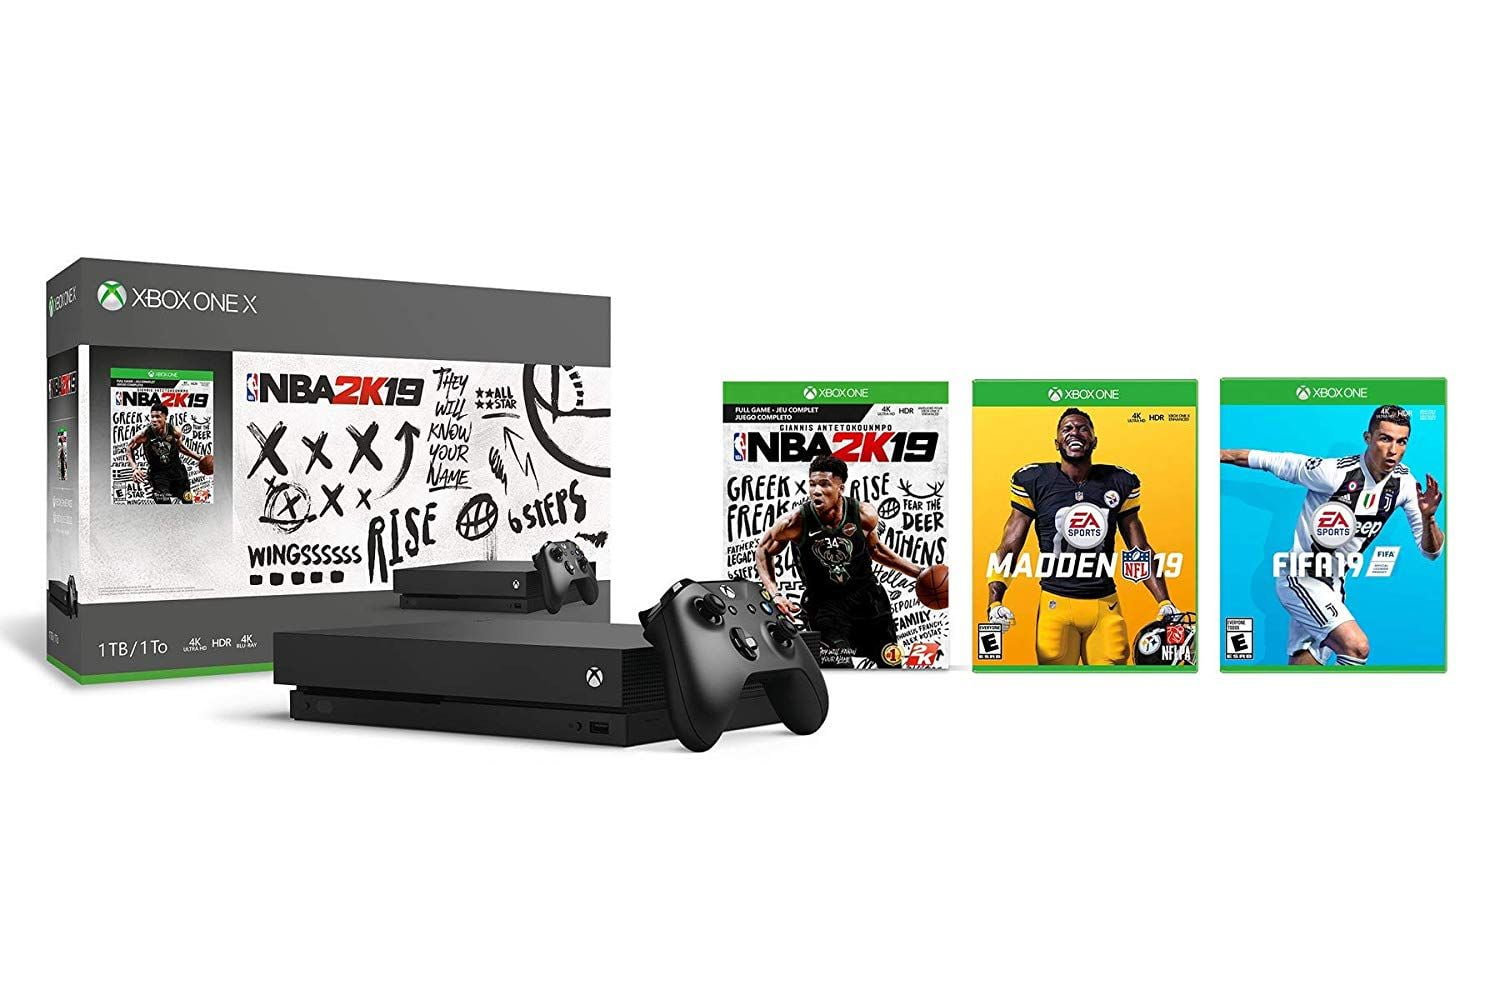 Moeras Typisch Kreek Xbox One X Enhanced NFL FIFA NBA 19 Pack: Madden NFL 19, NBA 2K19, FIFA 19  and 4K HDR Xbox One X 1TB Gaming Console - Black - Walmart.com